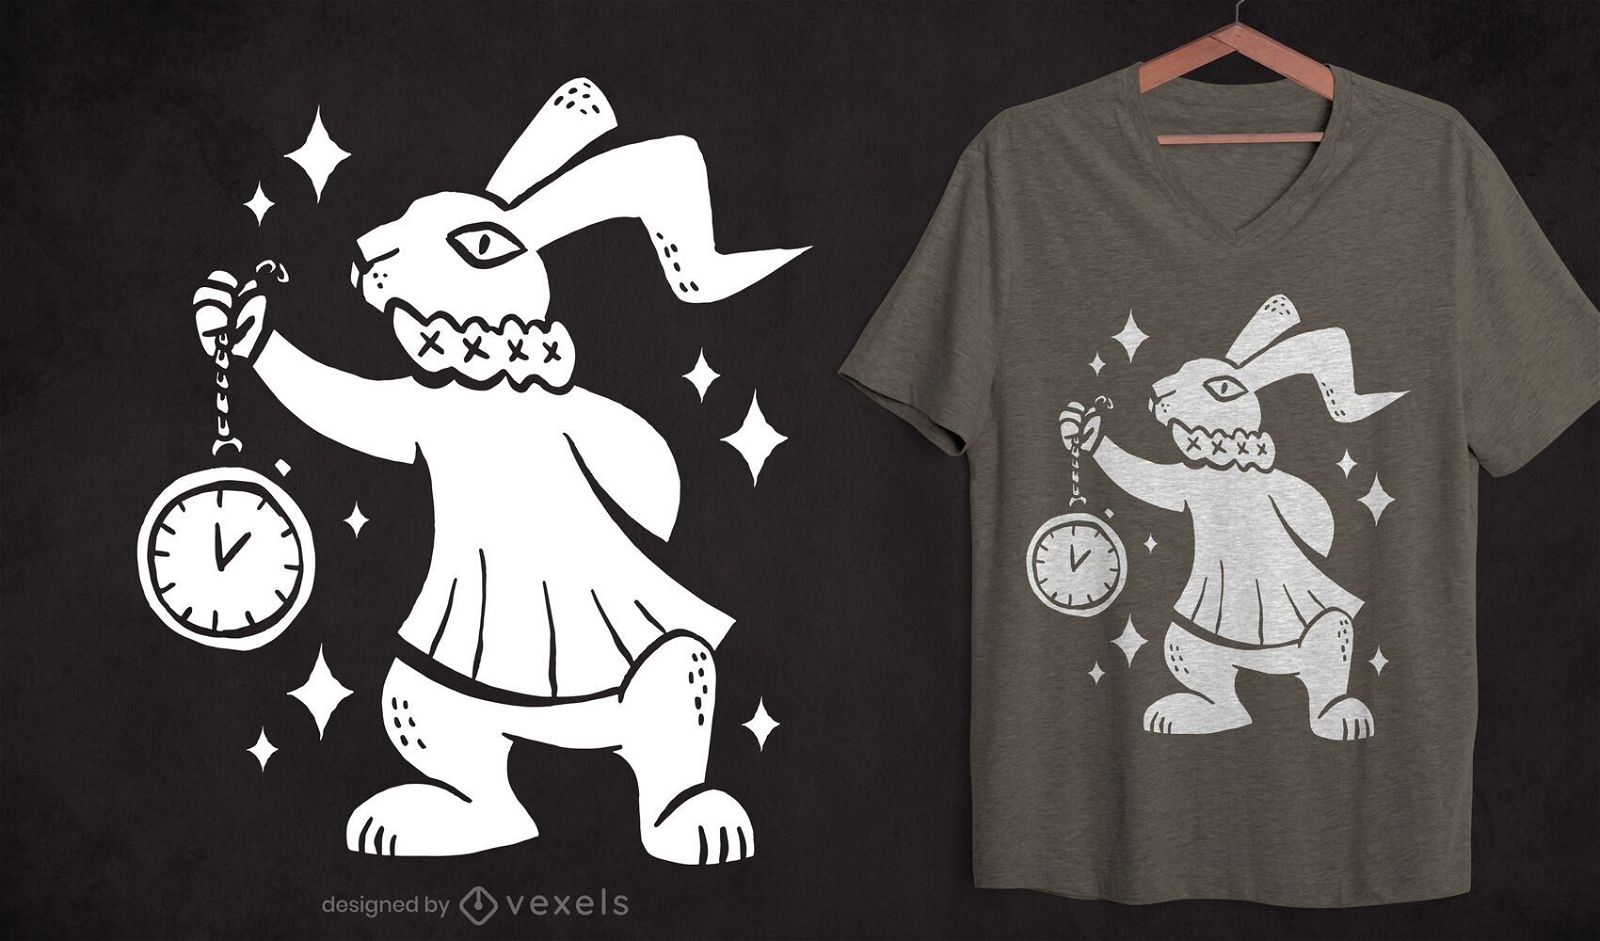 Rabbit cut-out t-shirt design